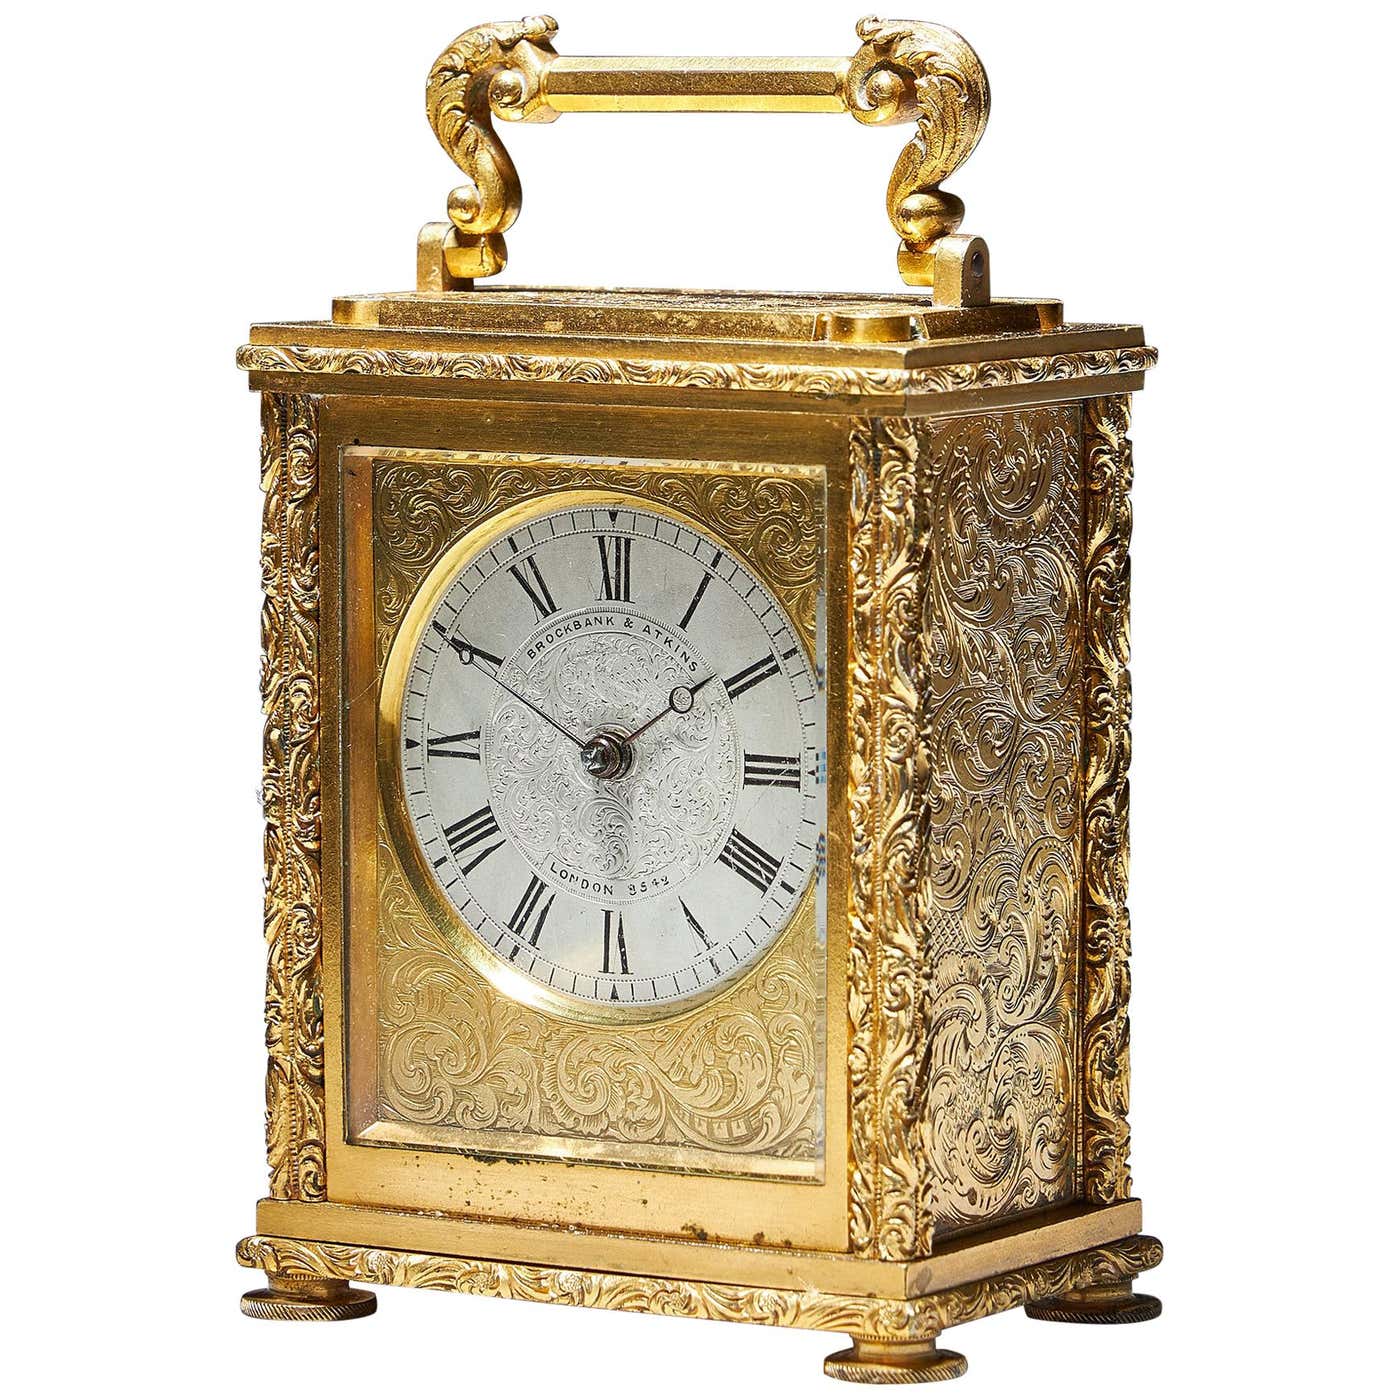 Very Rare English Carriage Clock Signed Brockbank and Atkins London at ...